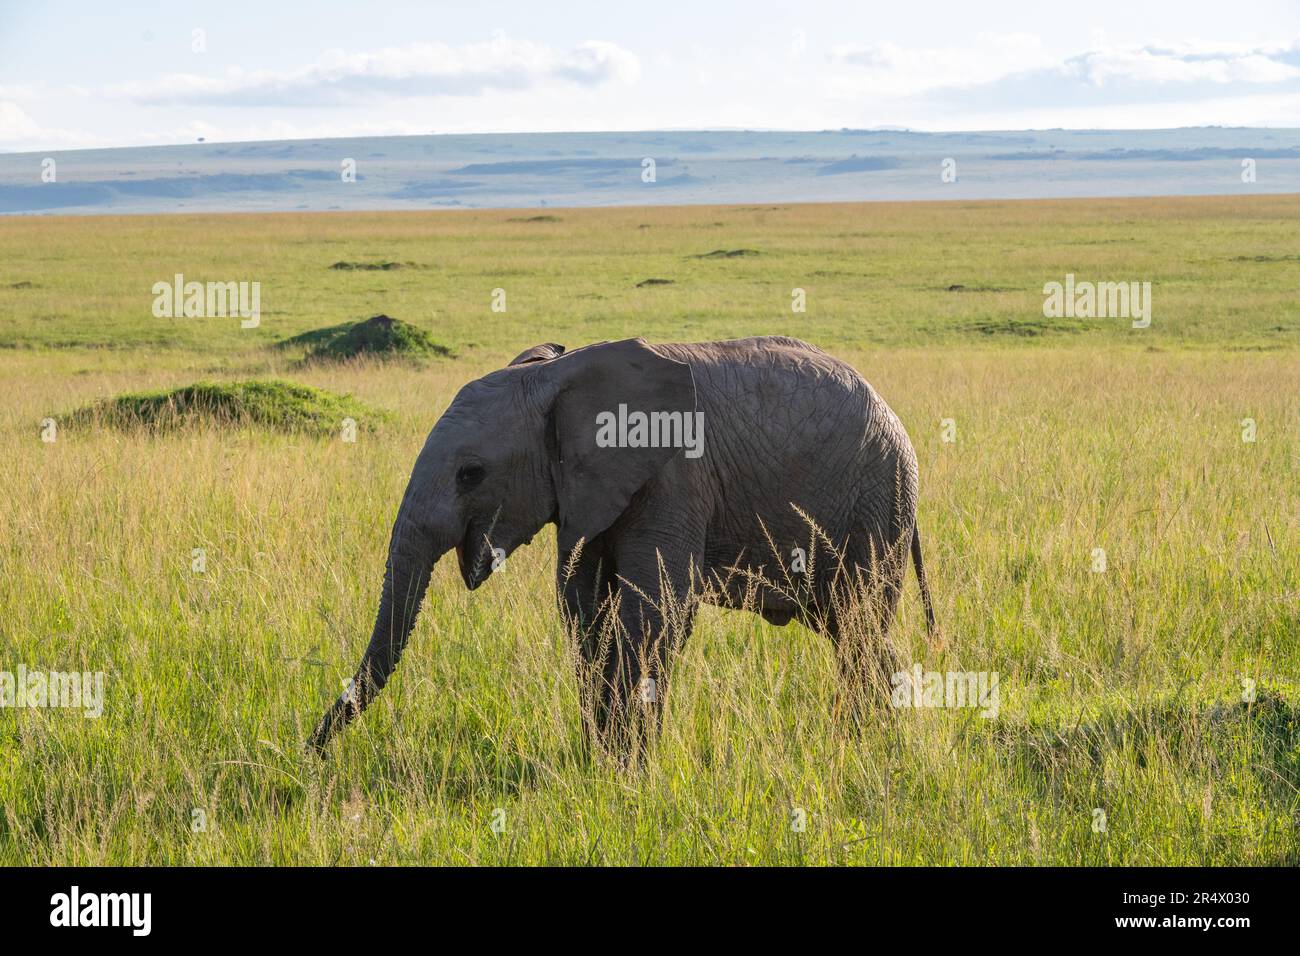 Ein junger afrikanischer Elefant (Loxodonta africana), der auf grünem Gras spielt. Maasai Mara Nationalpark, Kenia, Afrika. Stockfoto